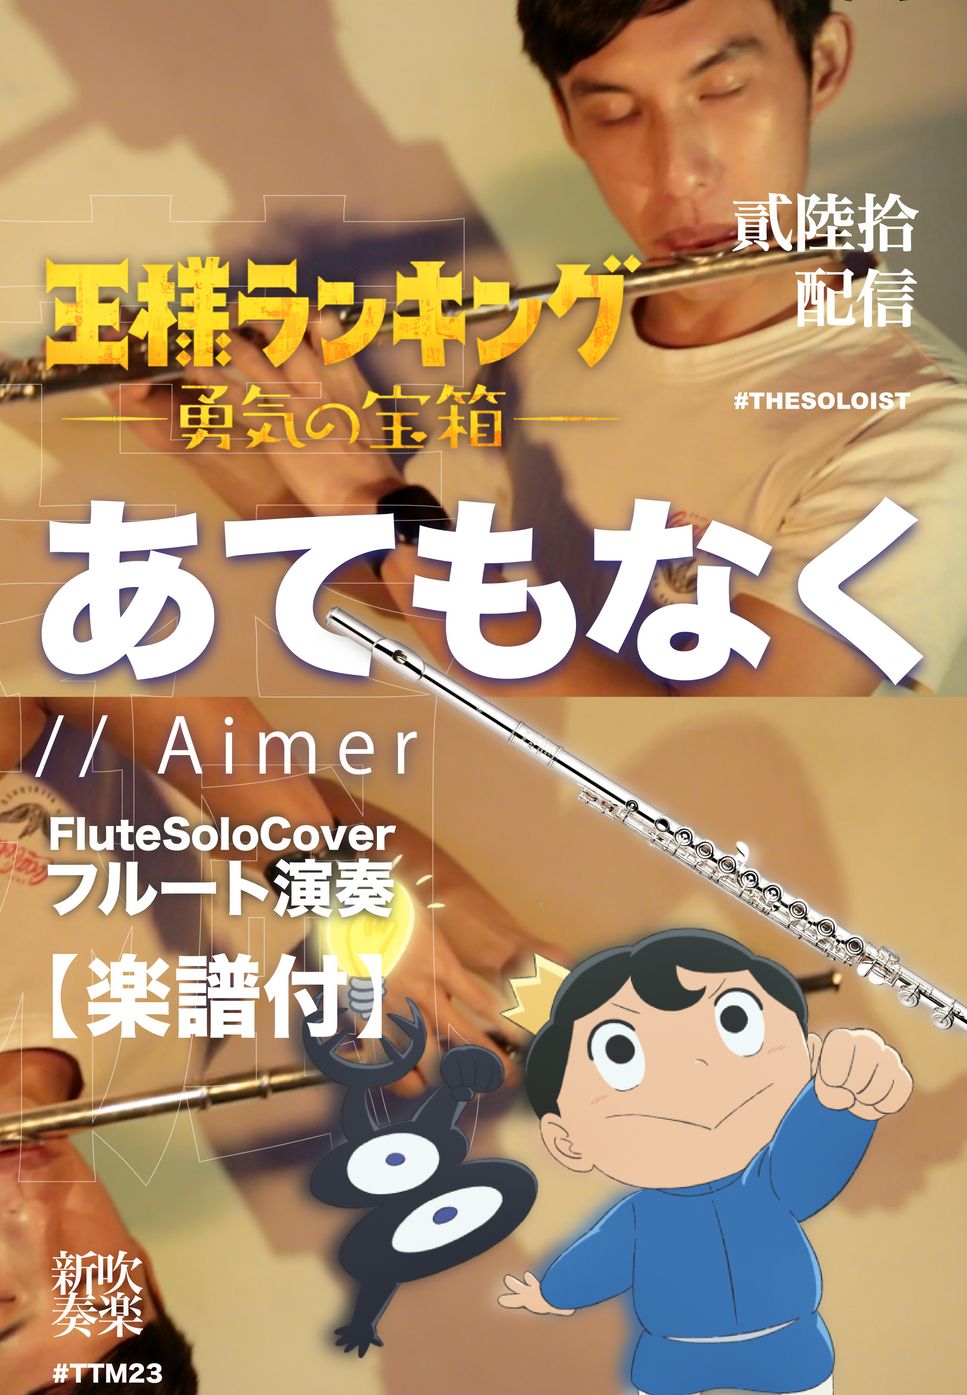 Aimer - Atemonaku (C/ Bb/ F/ Eb Solo Sheet Music) by FungYip